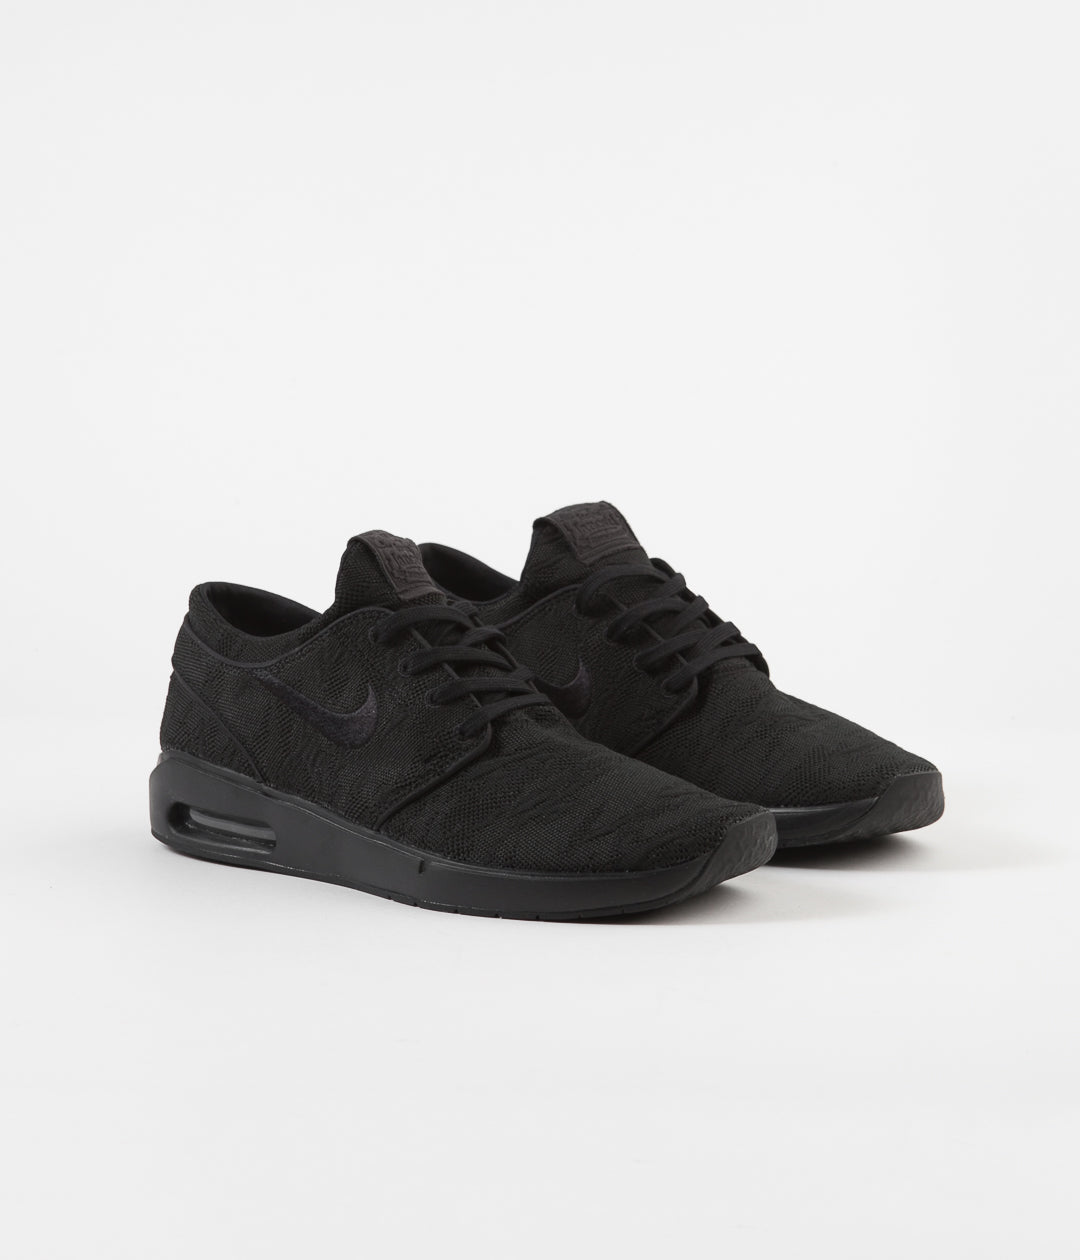 Nike SB Air Max Stefan 2 Shoes - Black / Black - Black - Black | Flatspot